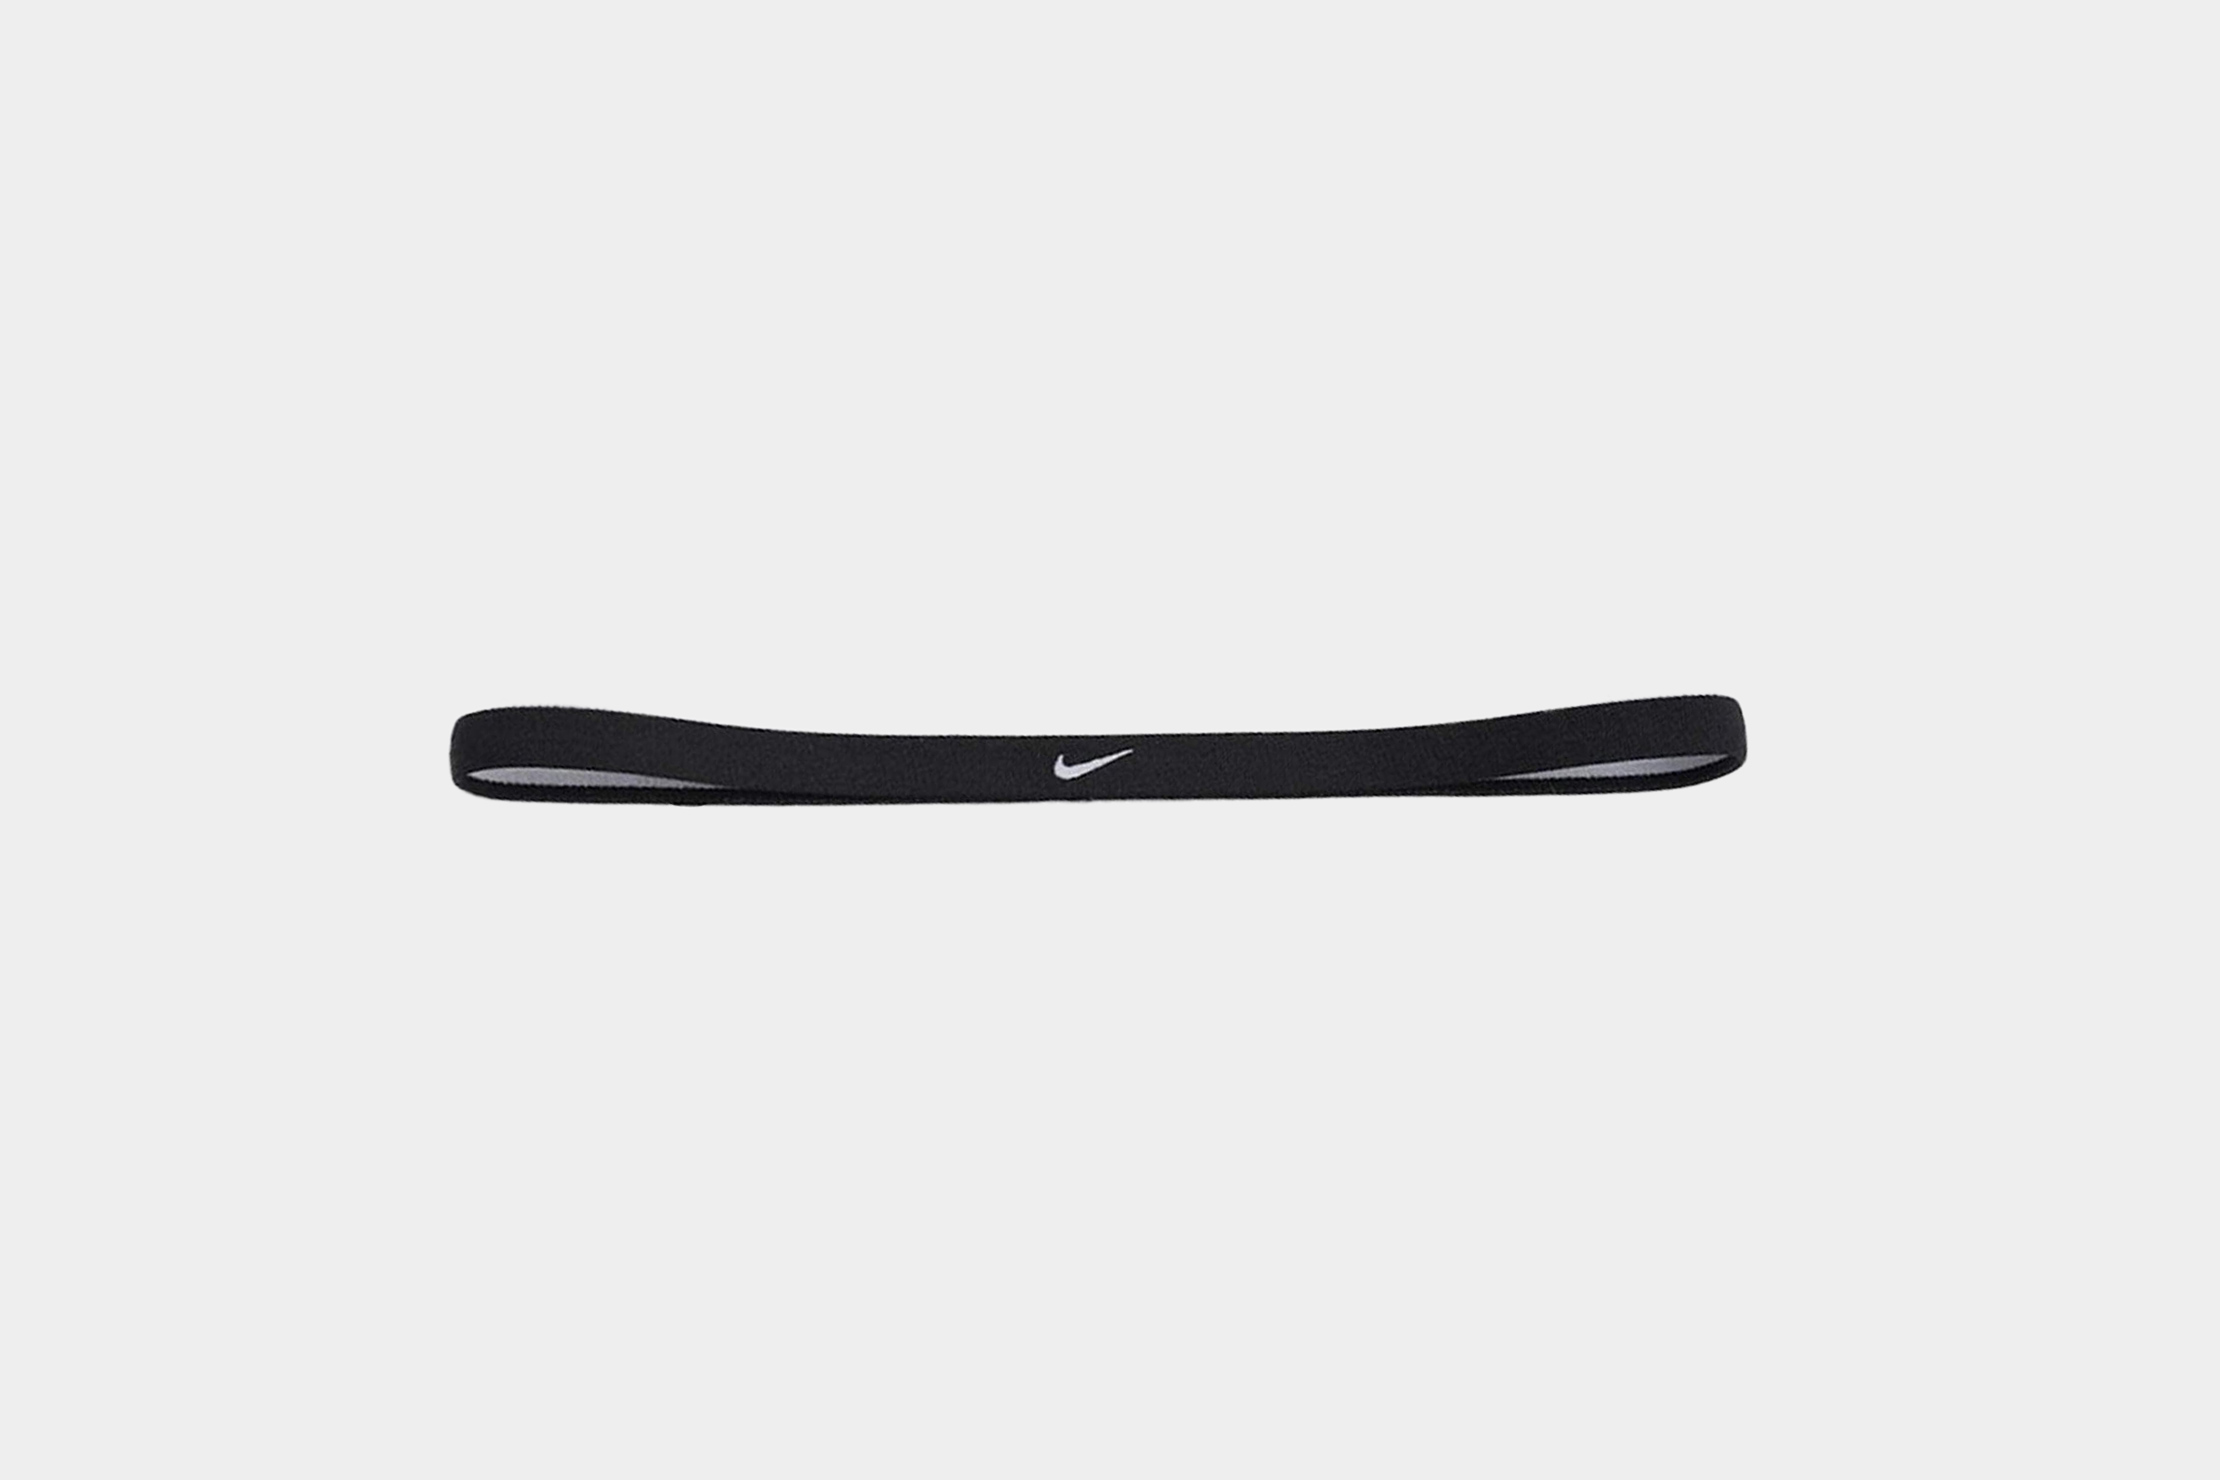 Nike Swoosh Sport Headband 2.0 Quick Look